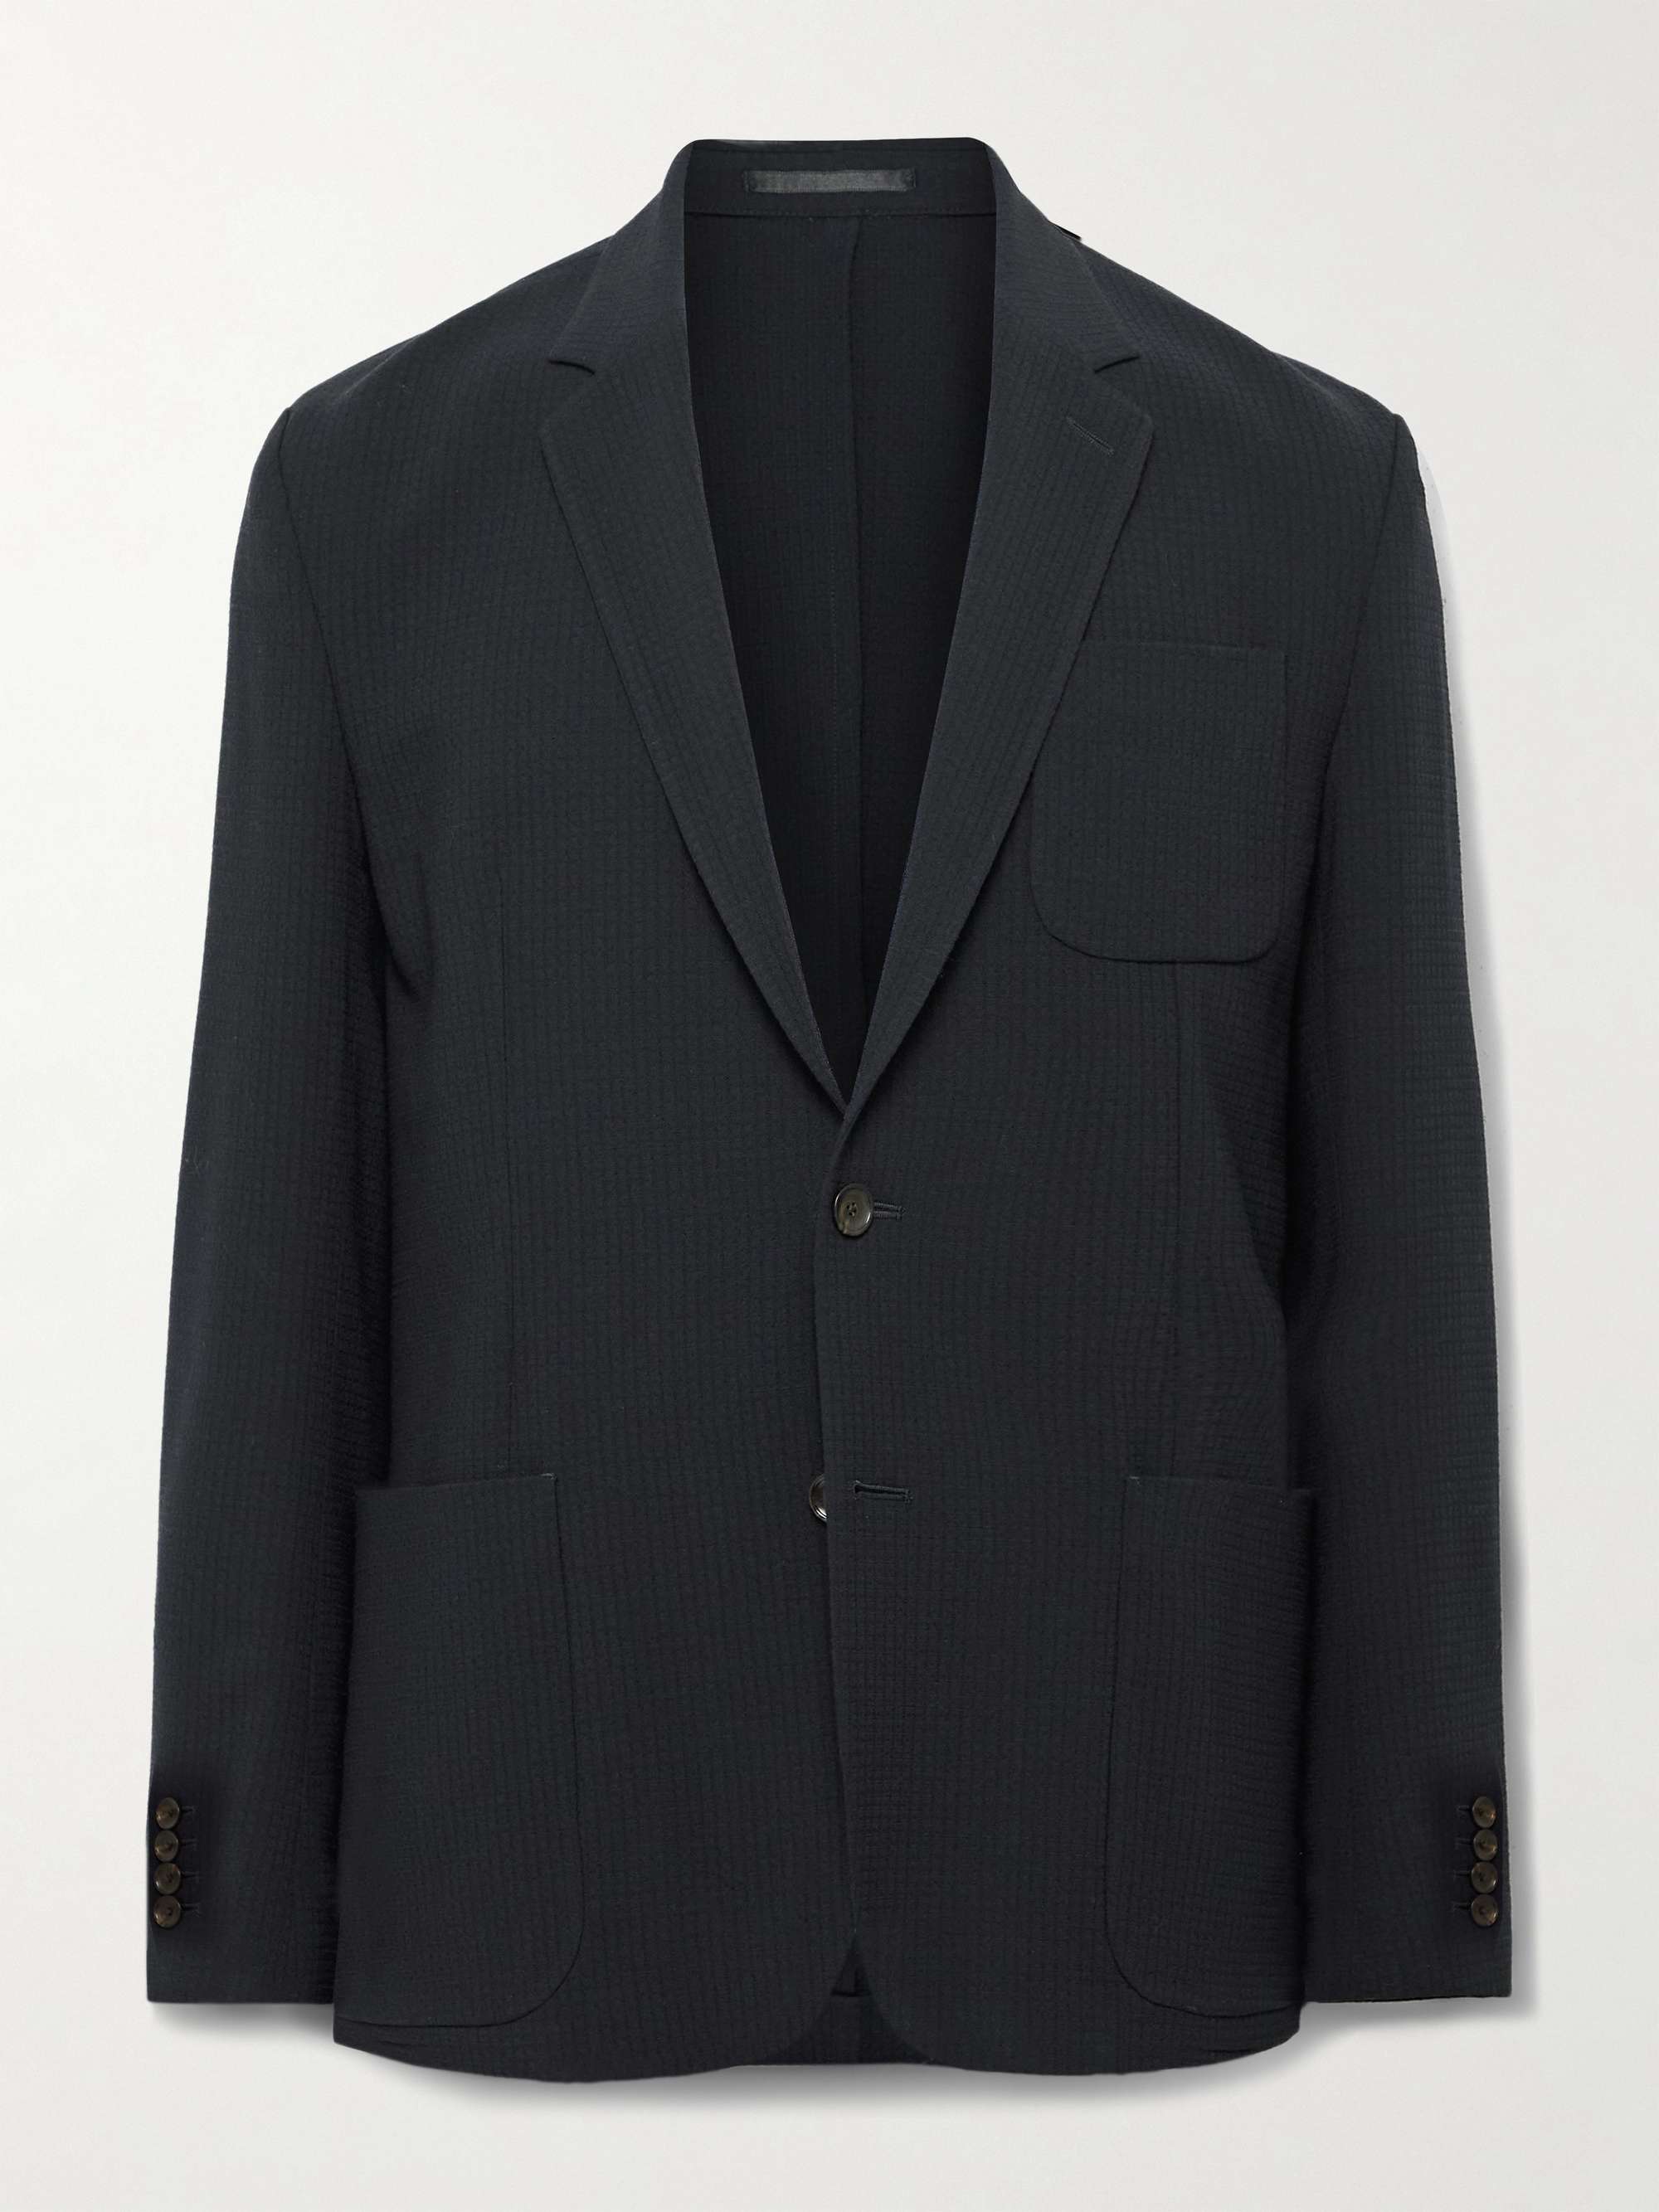 PAUL SMITH Unstructured Wool-Blend Jacquard Suit Jacket